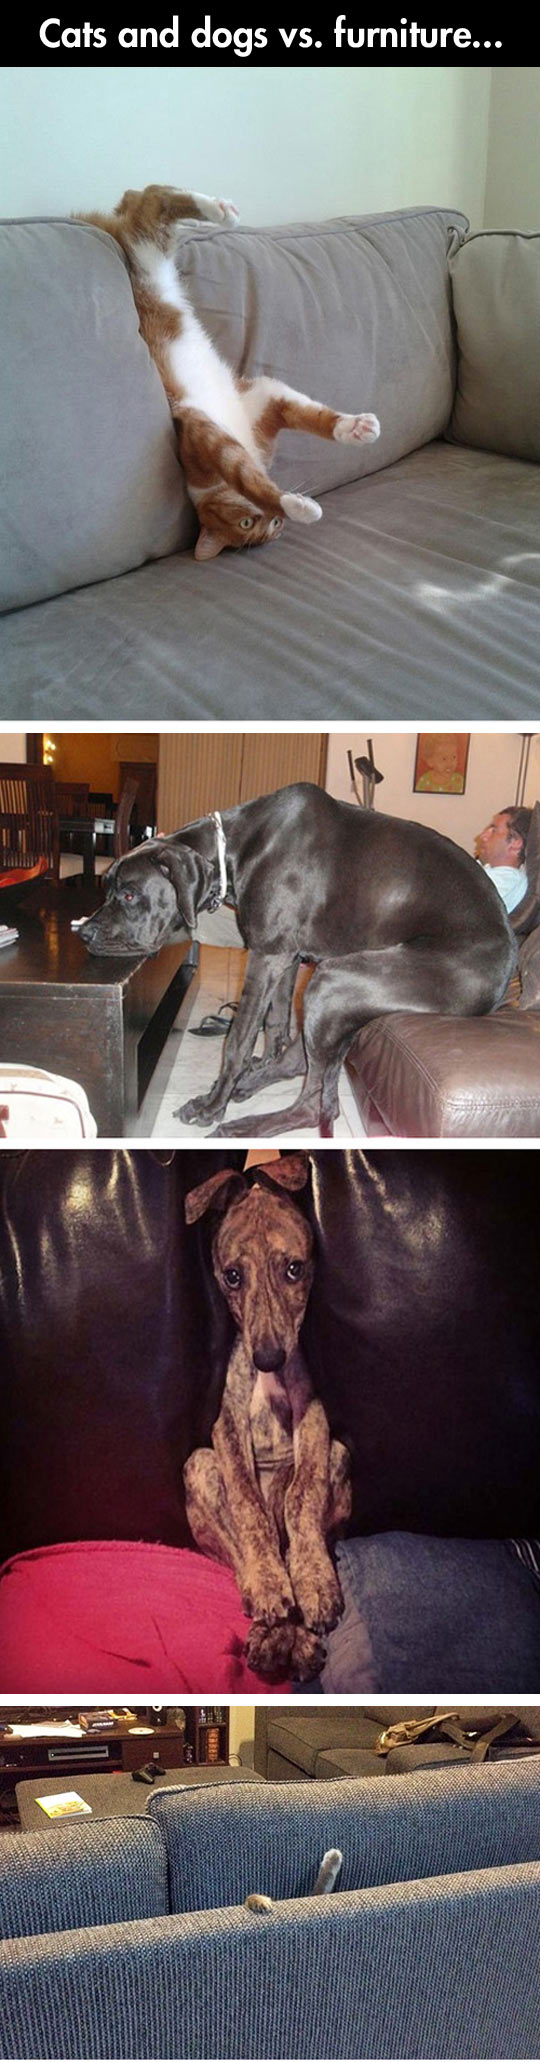 Pets vs. Furniture